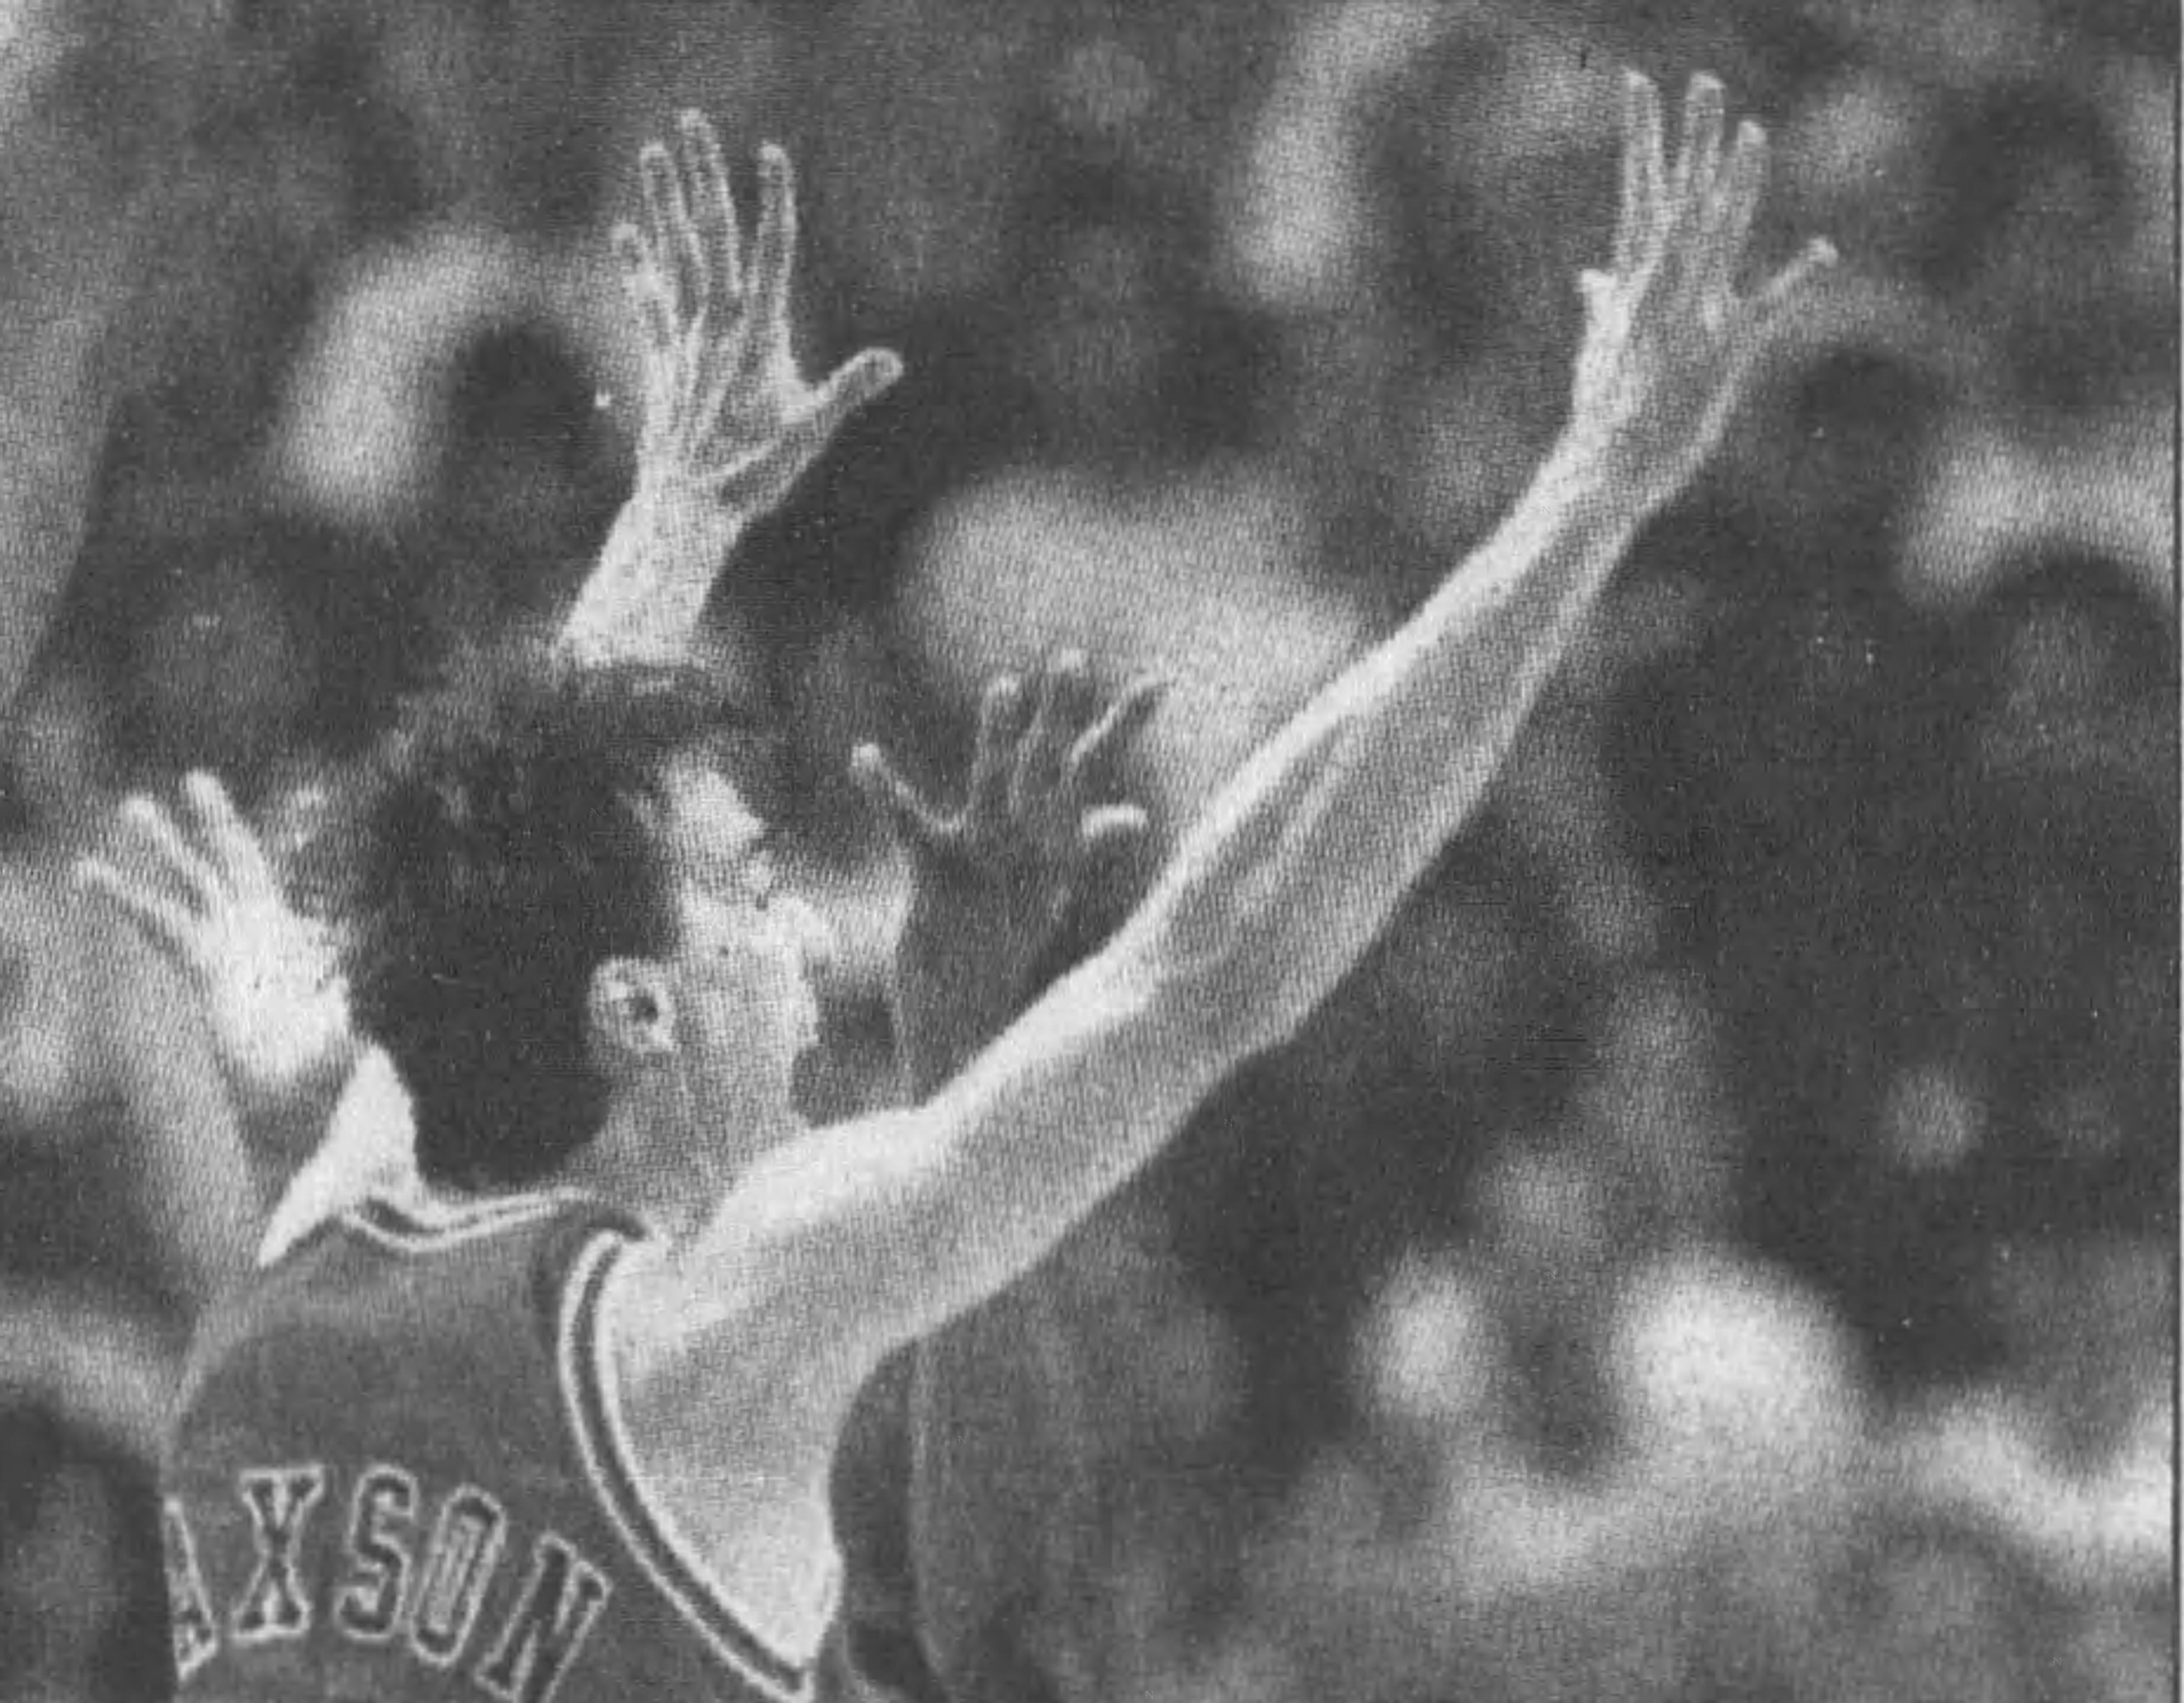 1993: John Paxson hits game-winning 3-pointer to give Chicago Bulls  three-peat